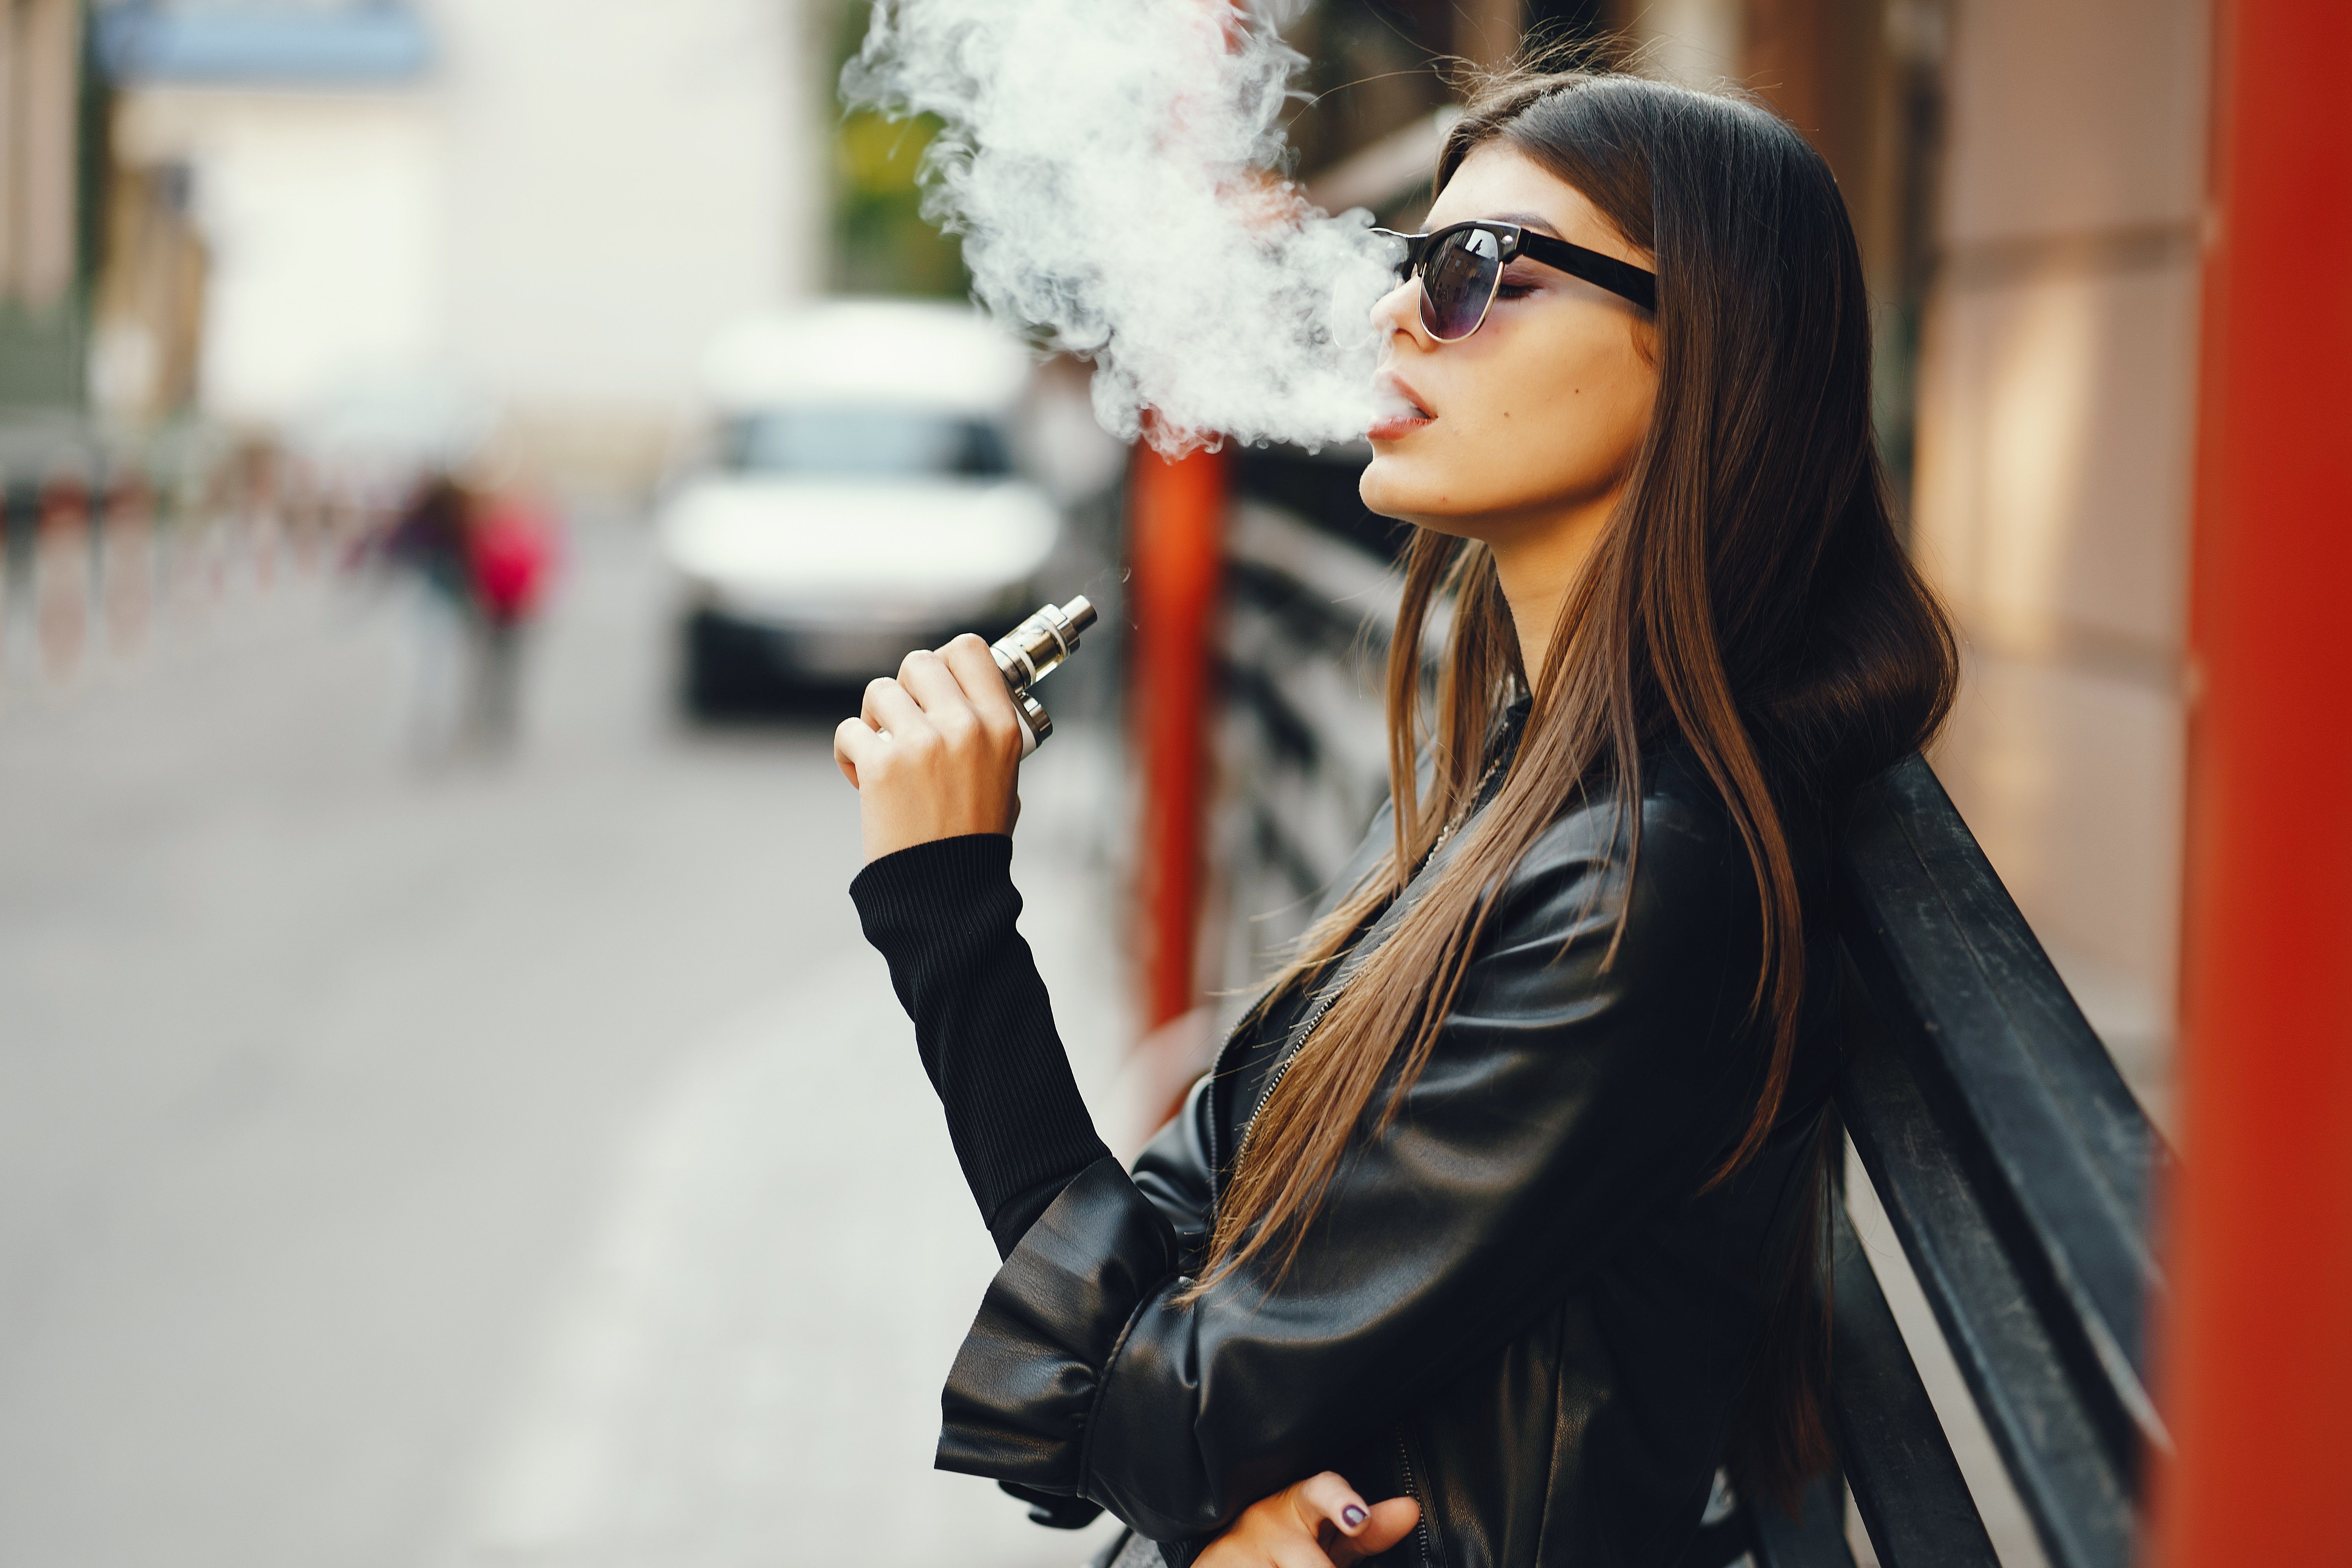 stylish girl smoking an e-cigarette as she is walking through the city